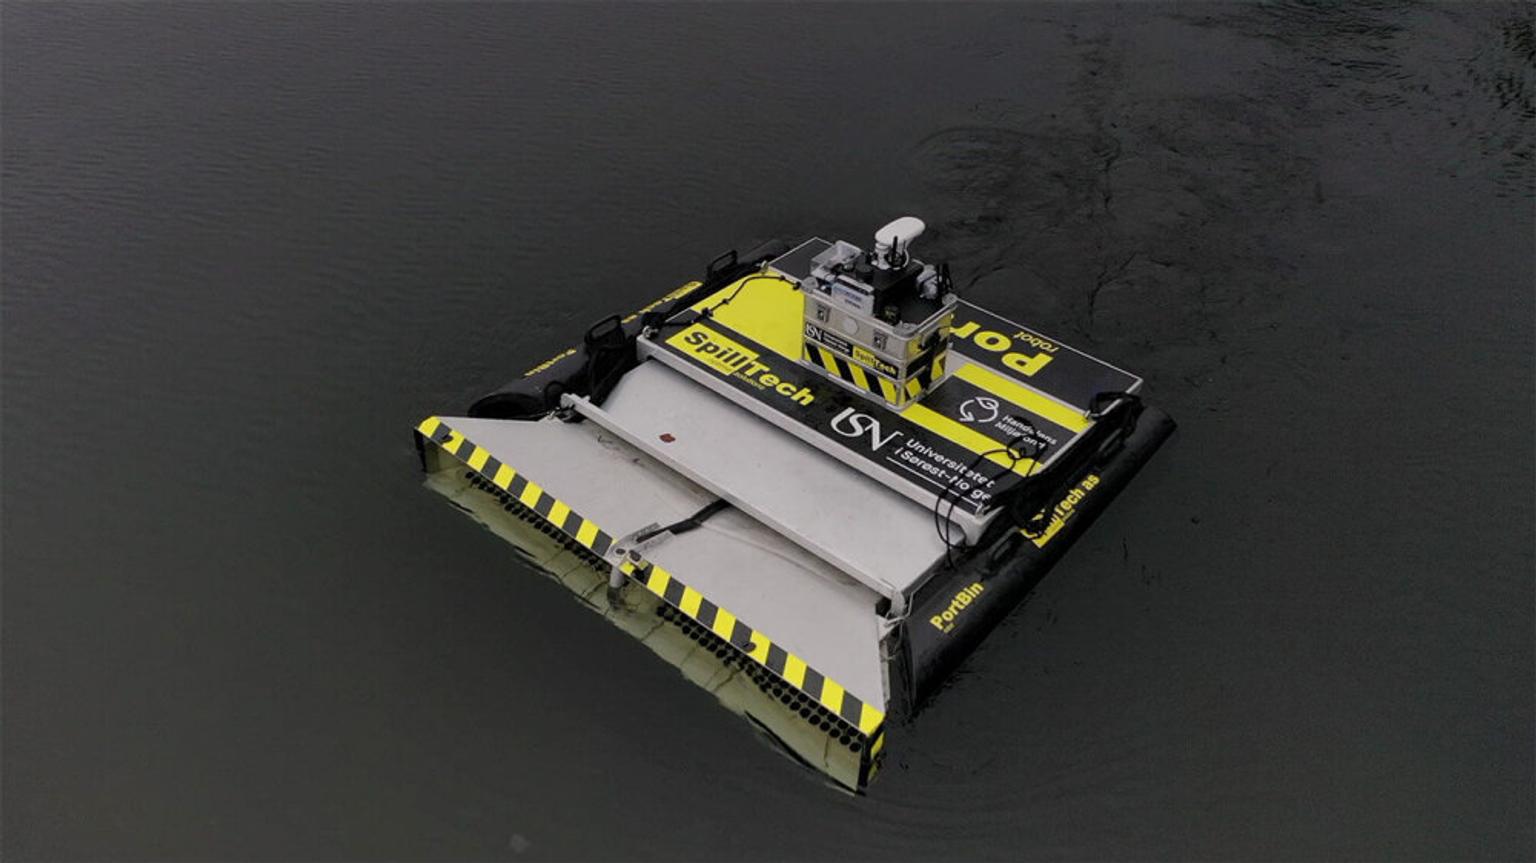 Spilltech portbinrobot in water